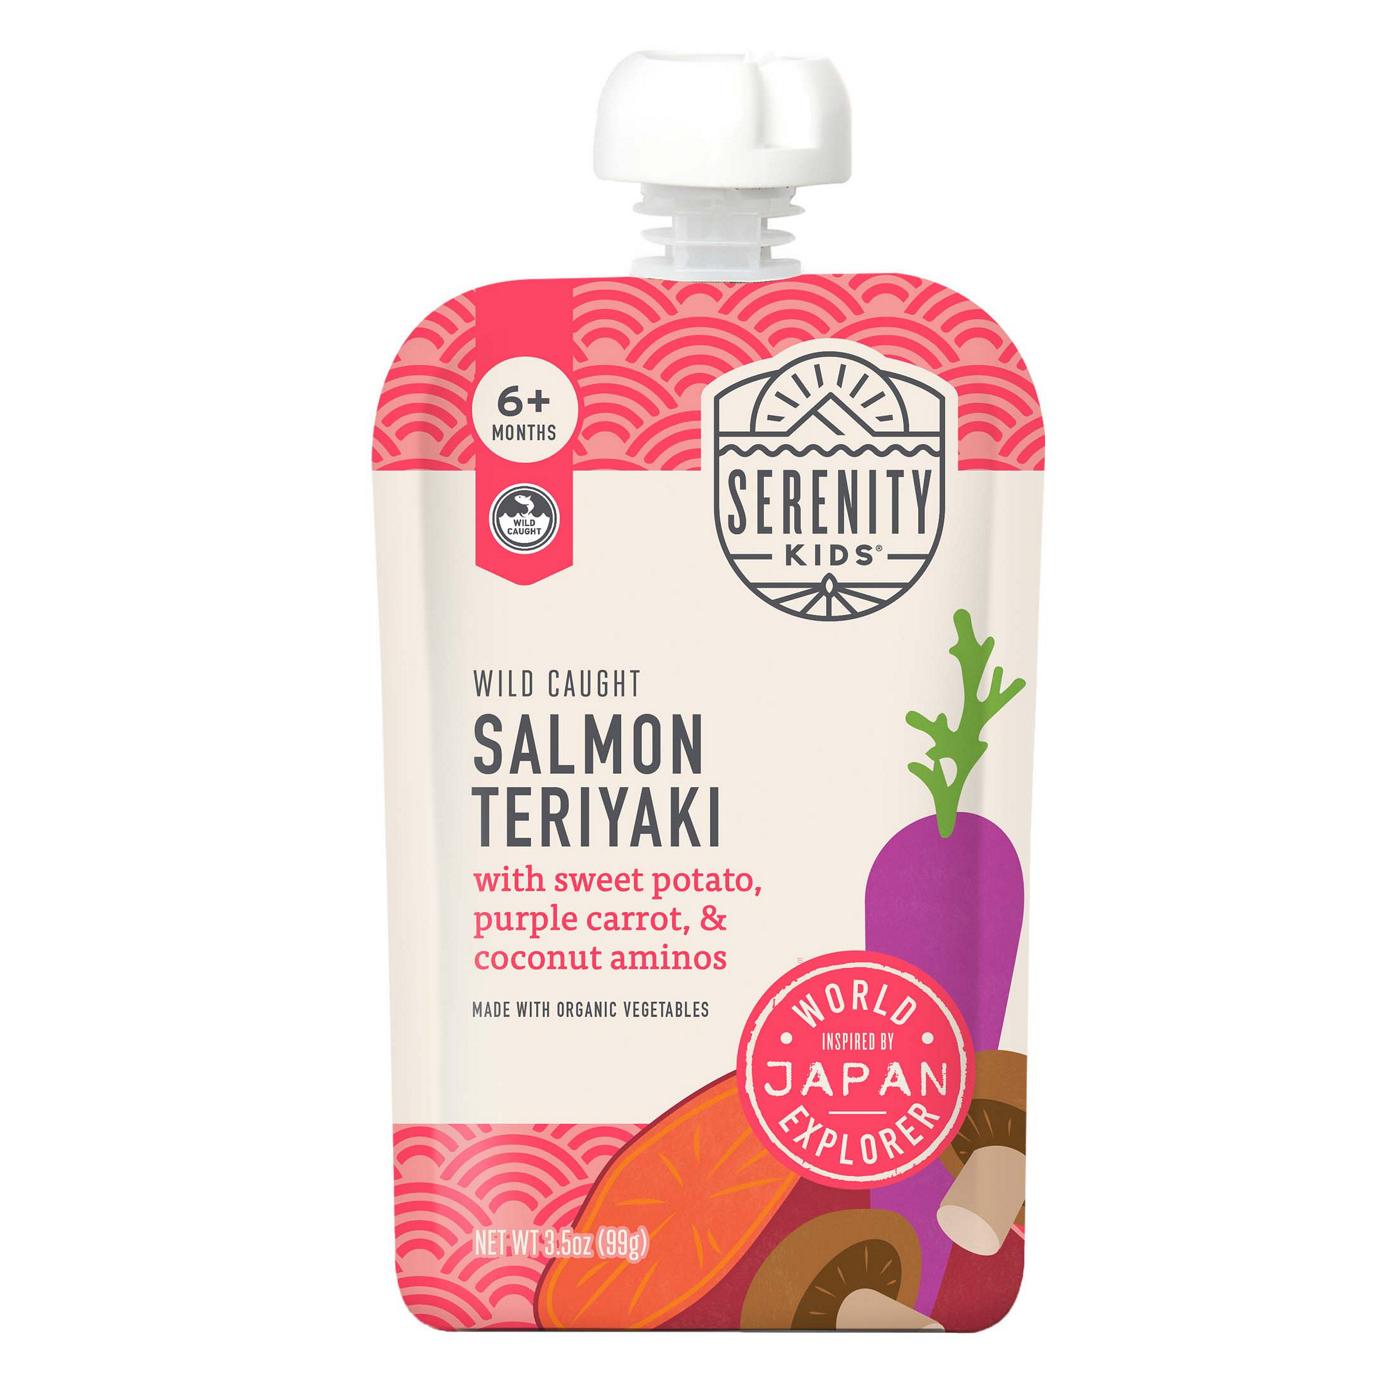 Serenity Kids Baby Food Pouch - Wild Caught Salmon Teriyaki; image 1 of 2